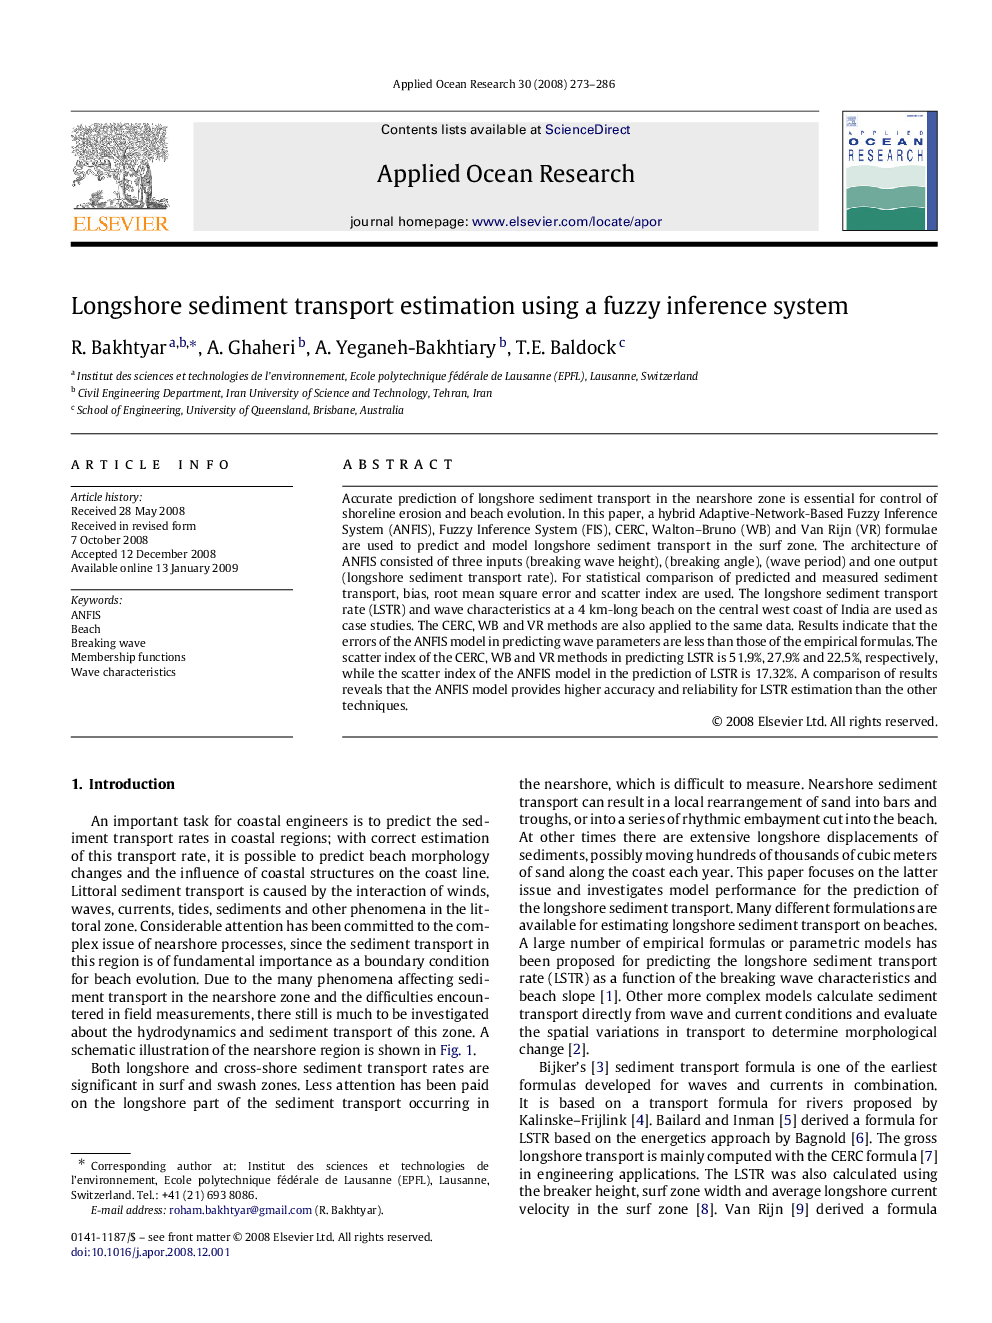 Longshore sediment transport estimation using a fuzzy inference system